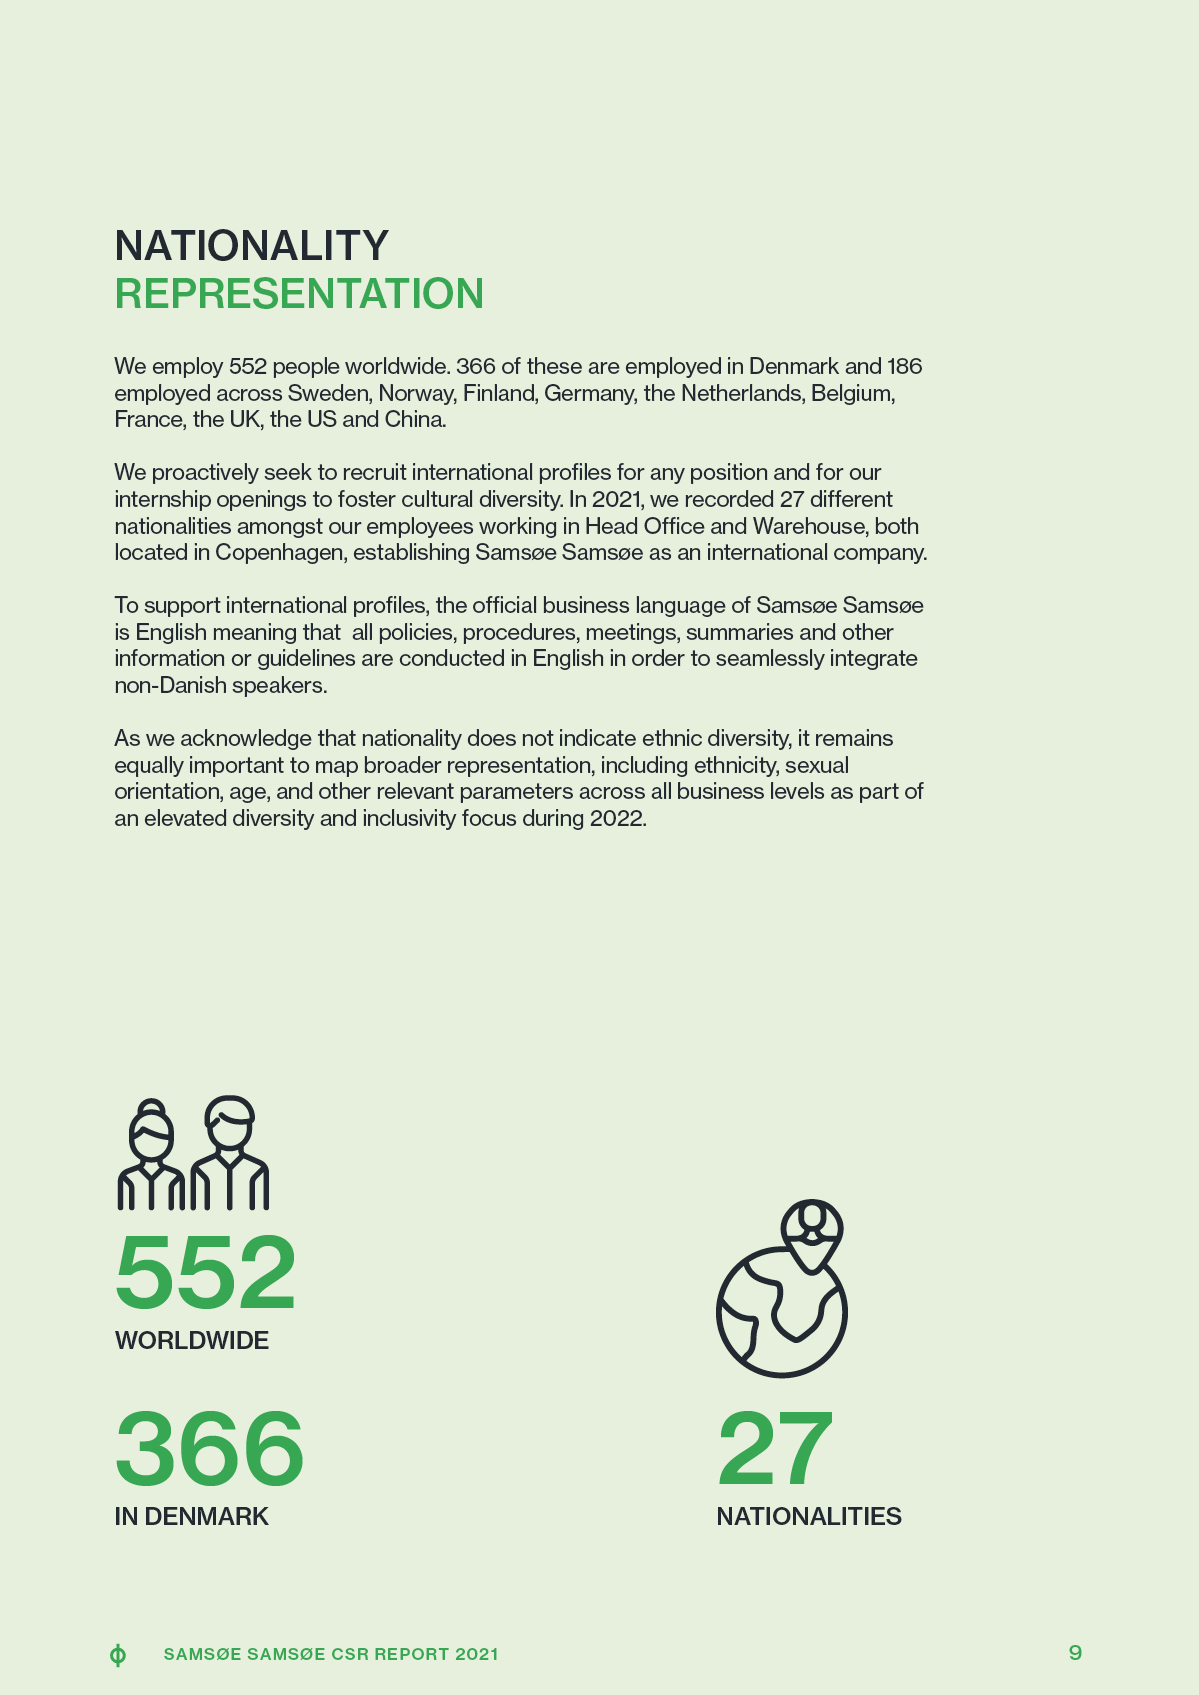 CSR Report 2021